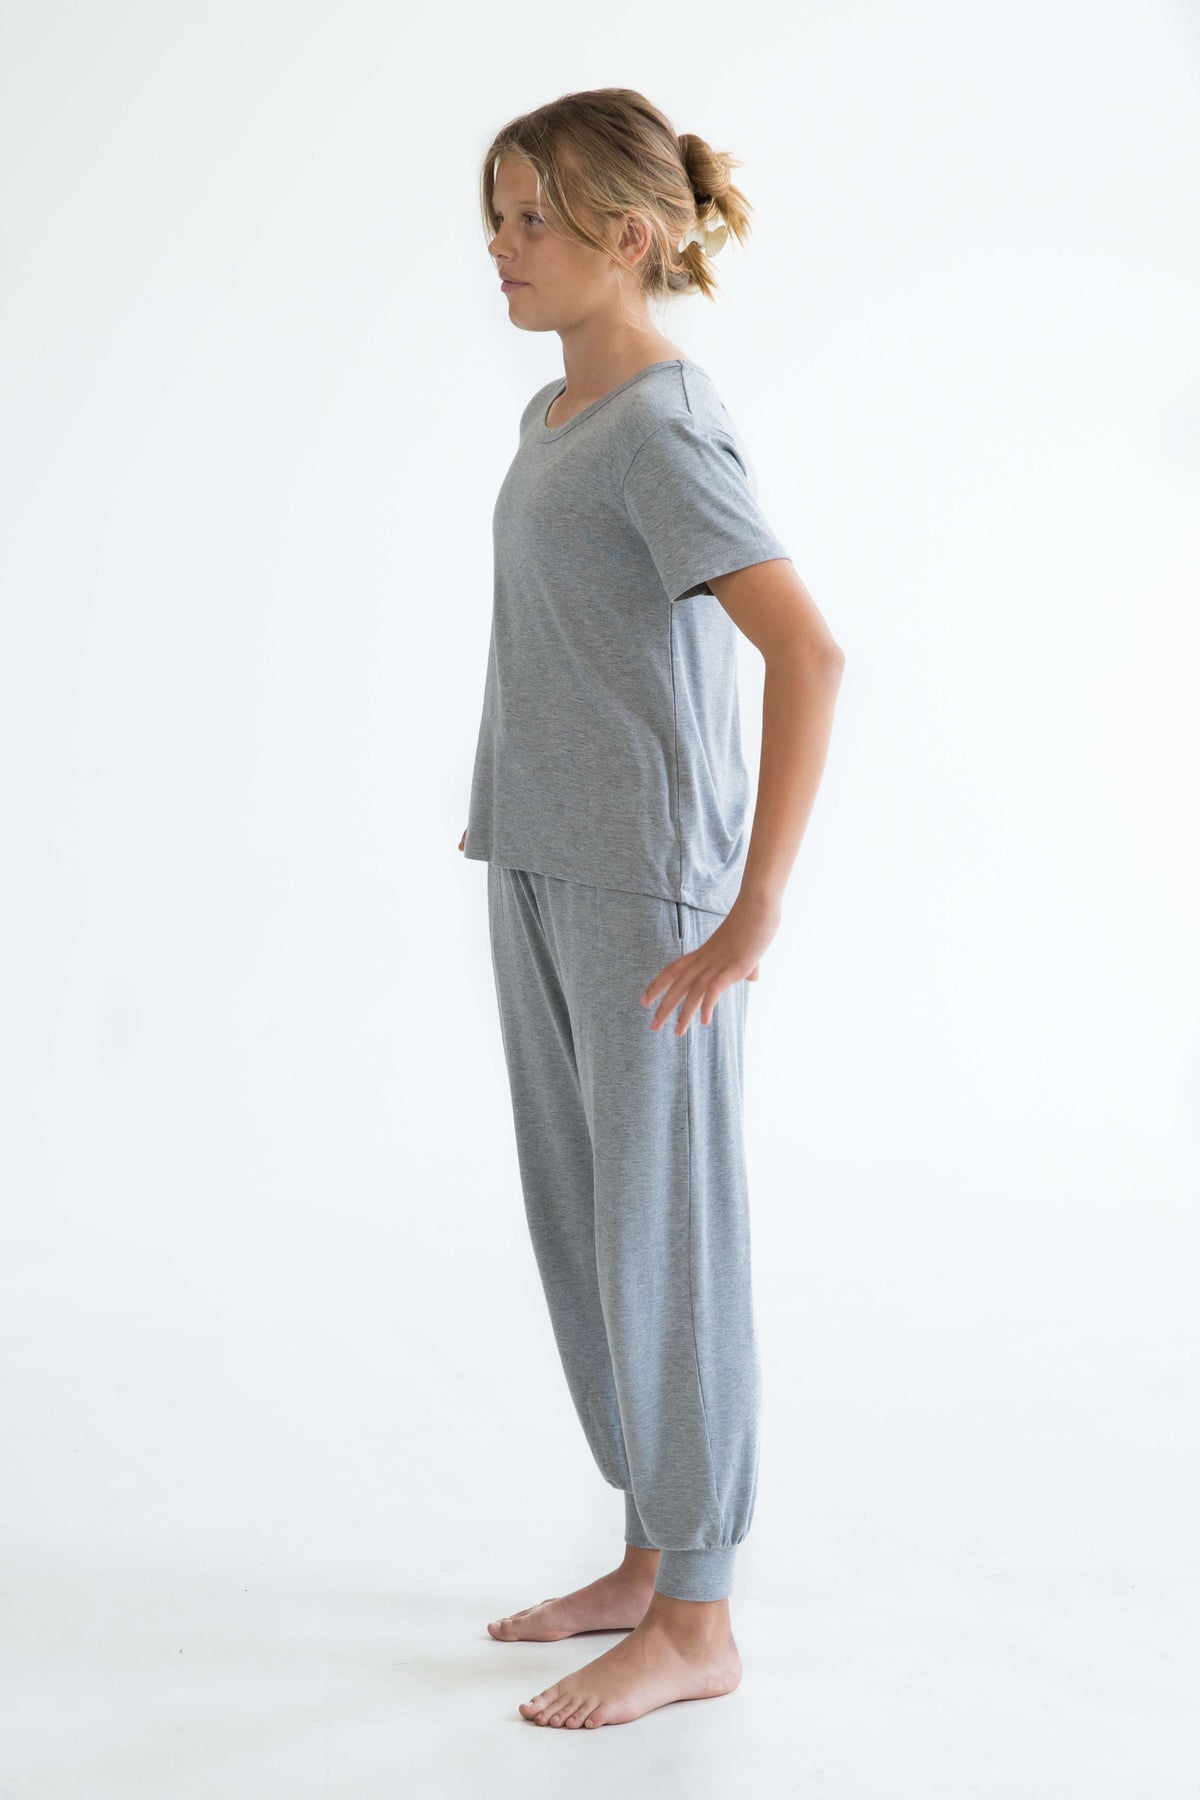 grey teen girls pyjamas set long pants and short sleeve top by Love Haidee Australia side